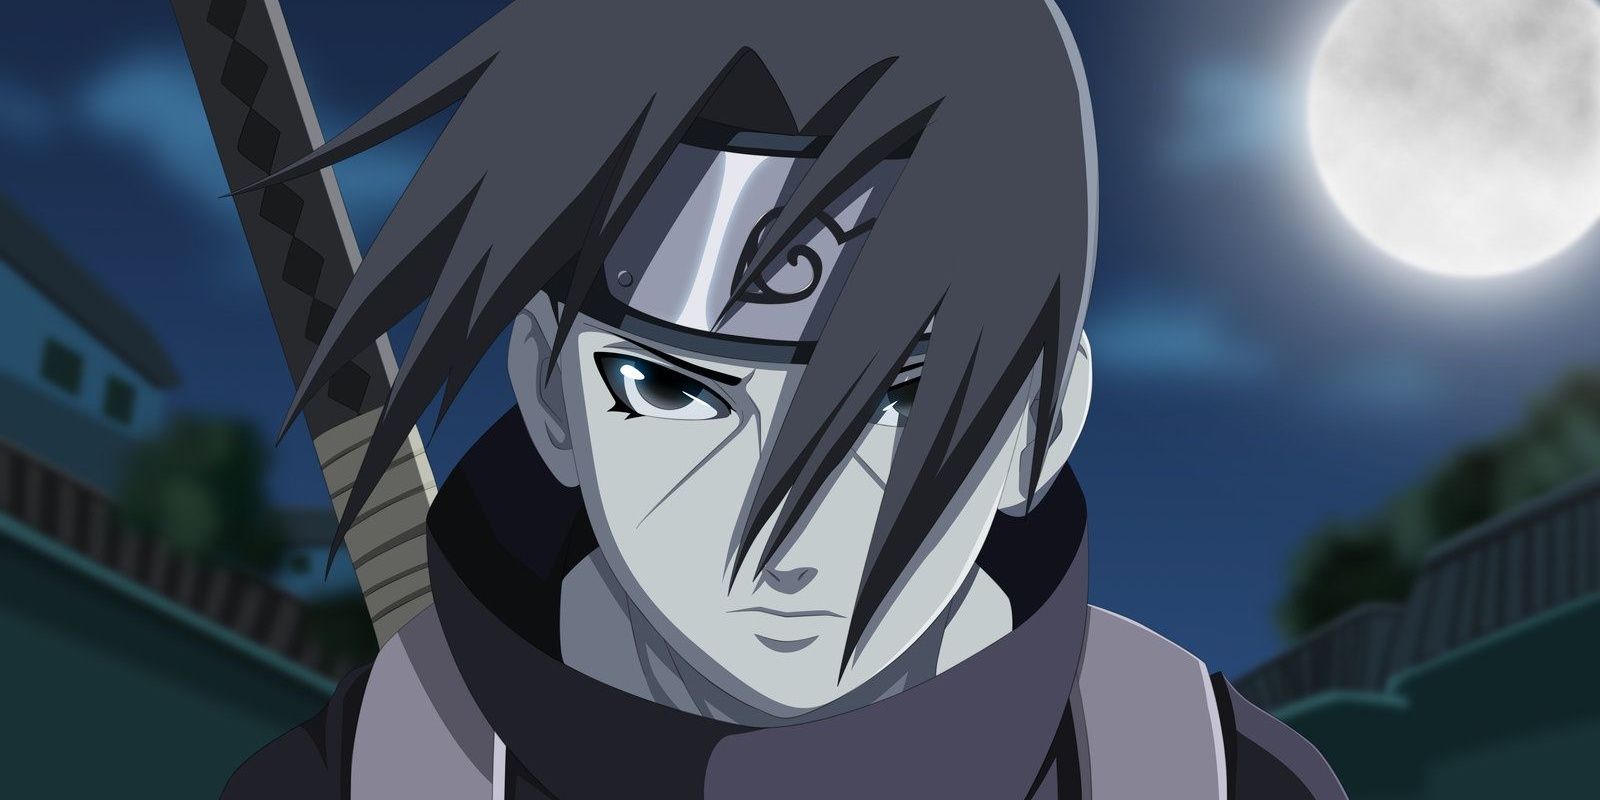 Itachi Uchiha stands below a full moon in Naruto